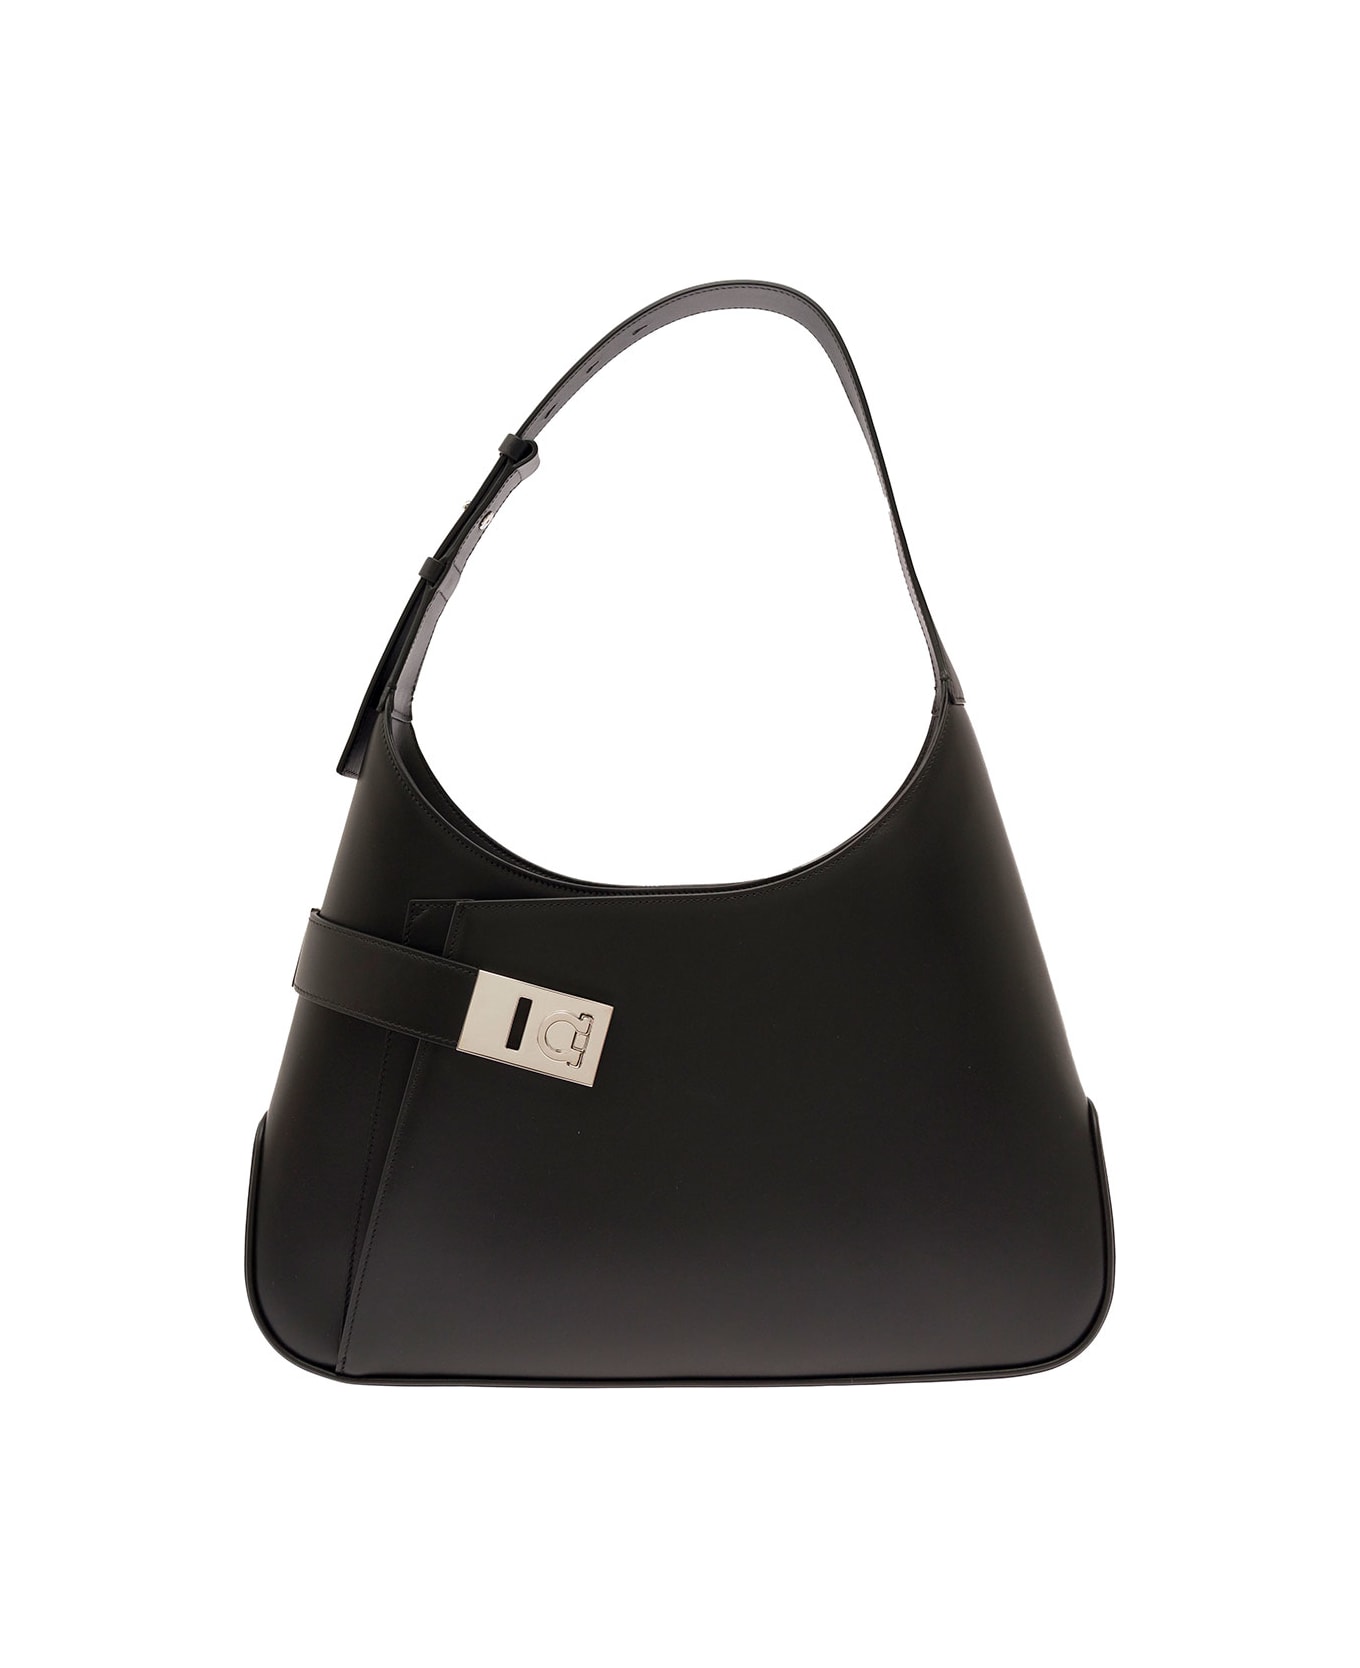 Ferragamo Black Hobo Shoulder Bag With Asymmetric Pocket And Gancini Buckle In Leather Woman - Black